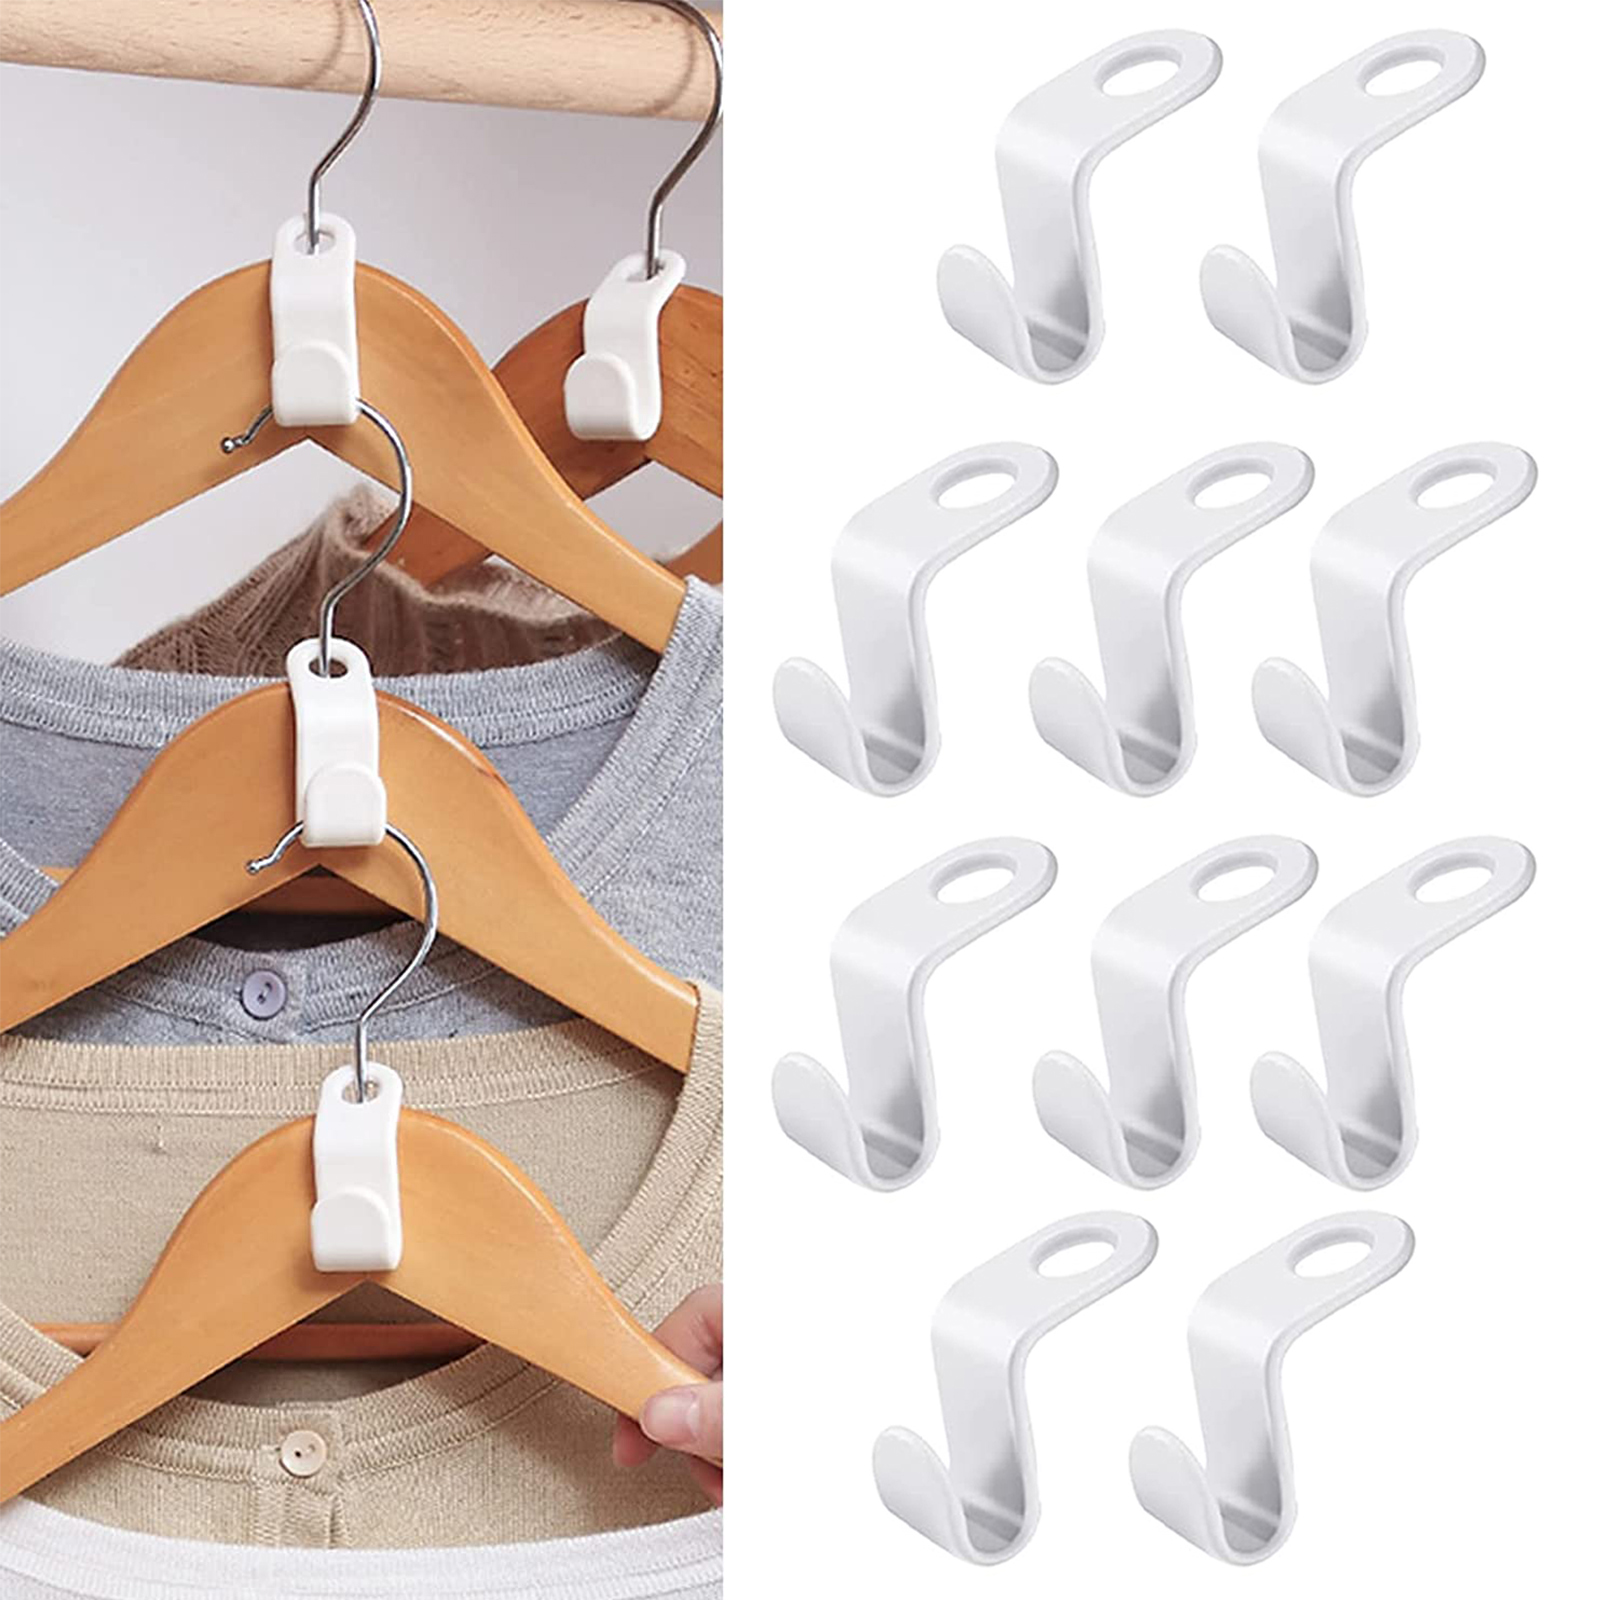 10/5Pcs Clothes Hanger Hooks Space Saving Closet Connector Hook